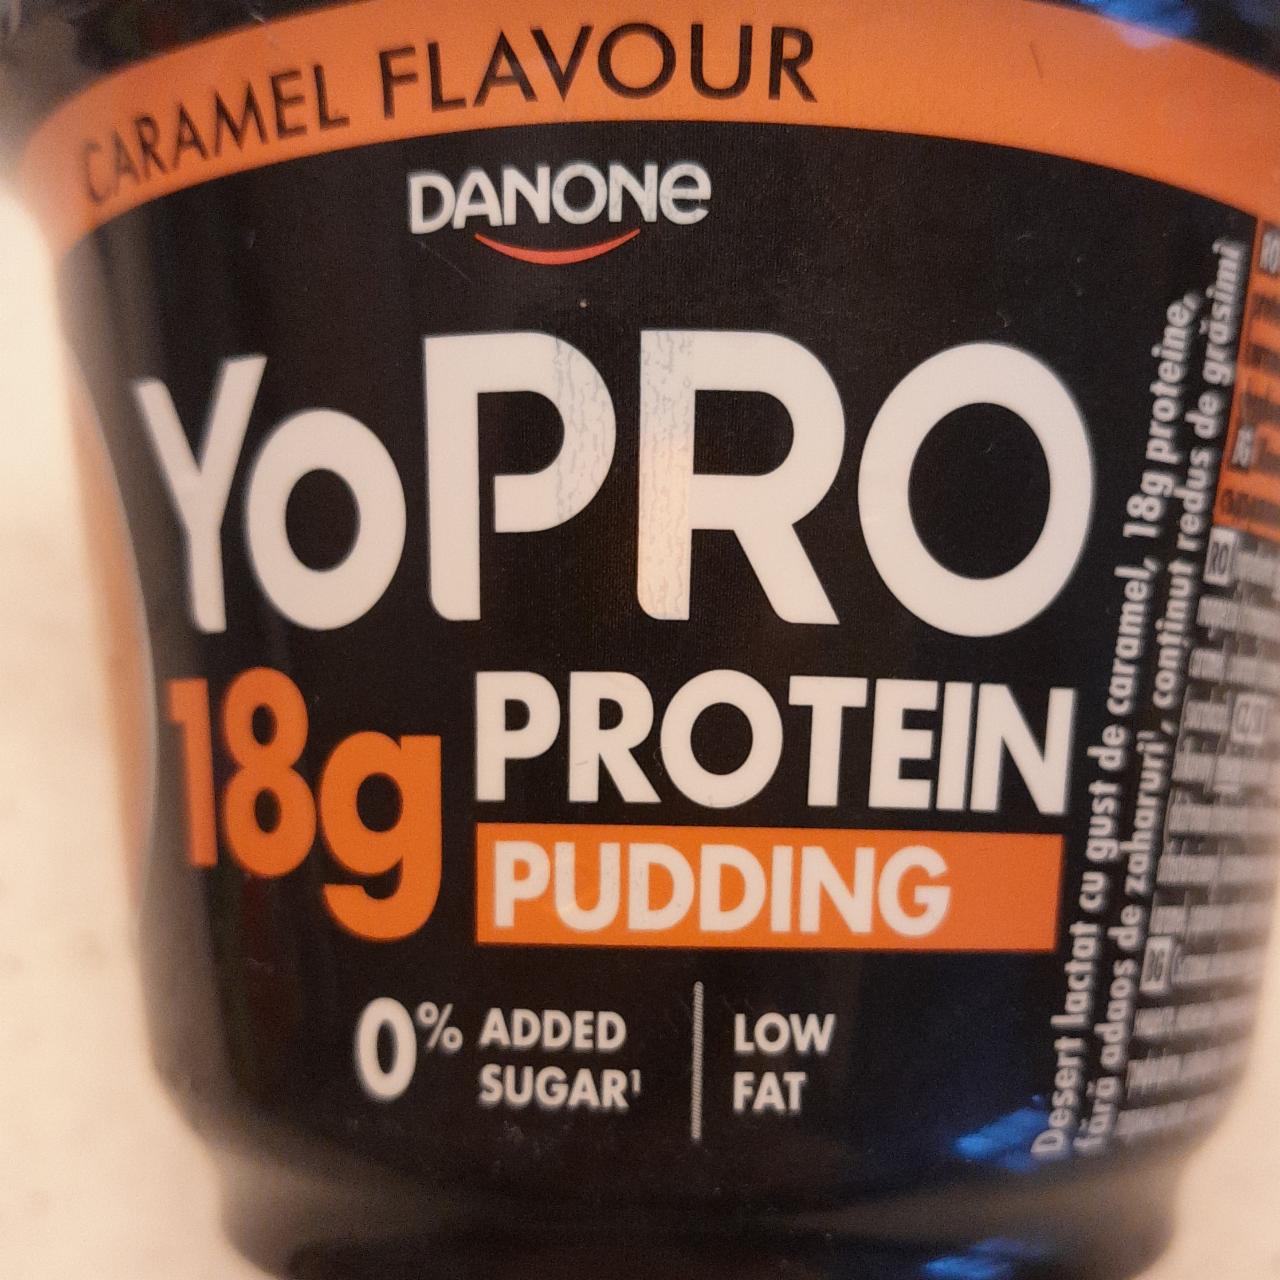 Fotografie - YoPro Protein Pudding 18g Caramel flavour Danone